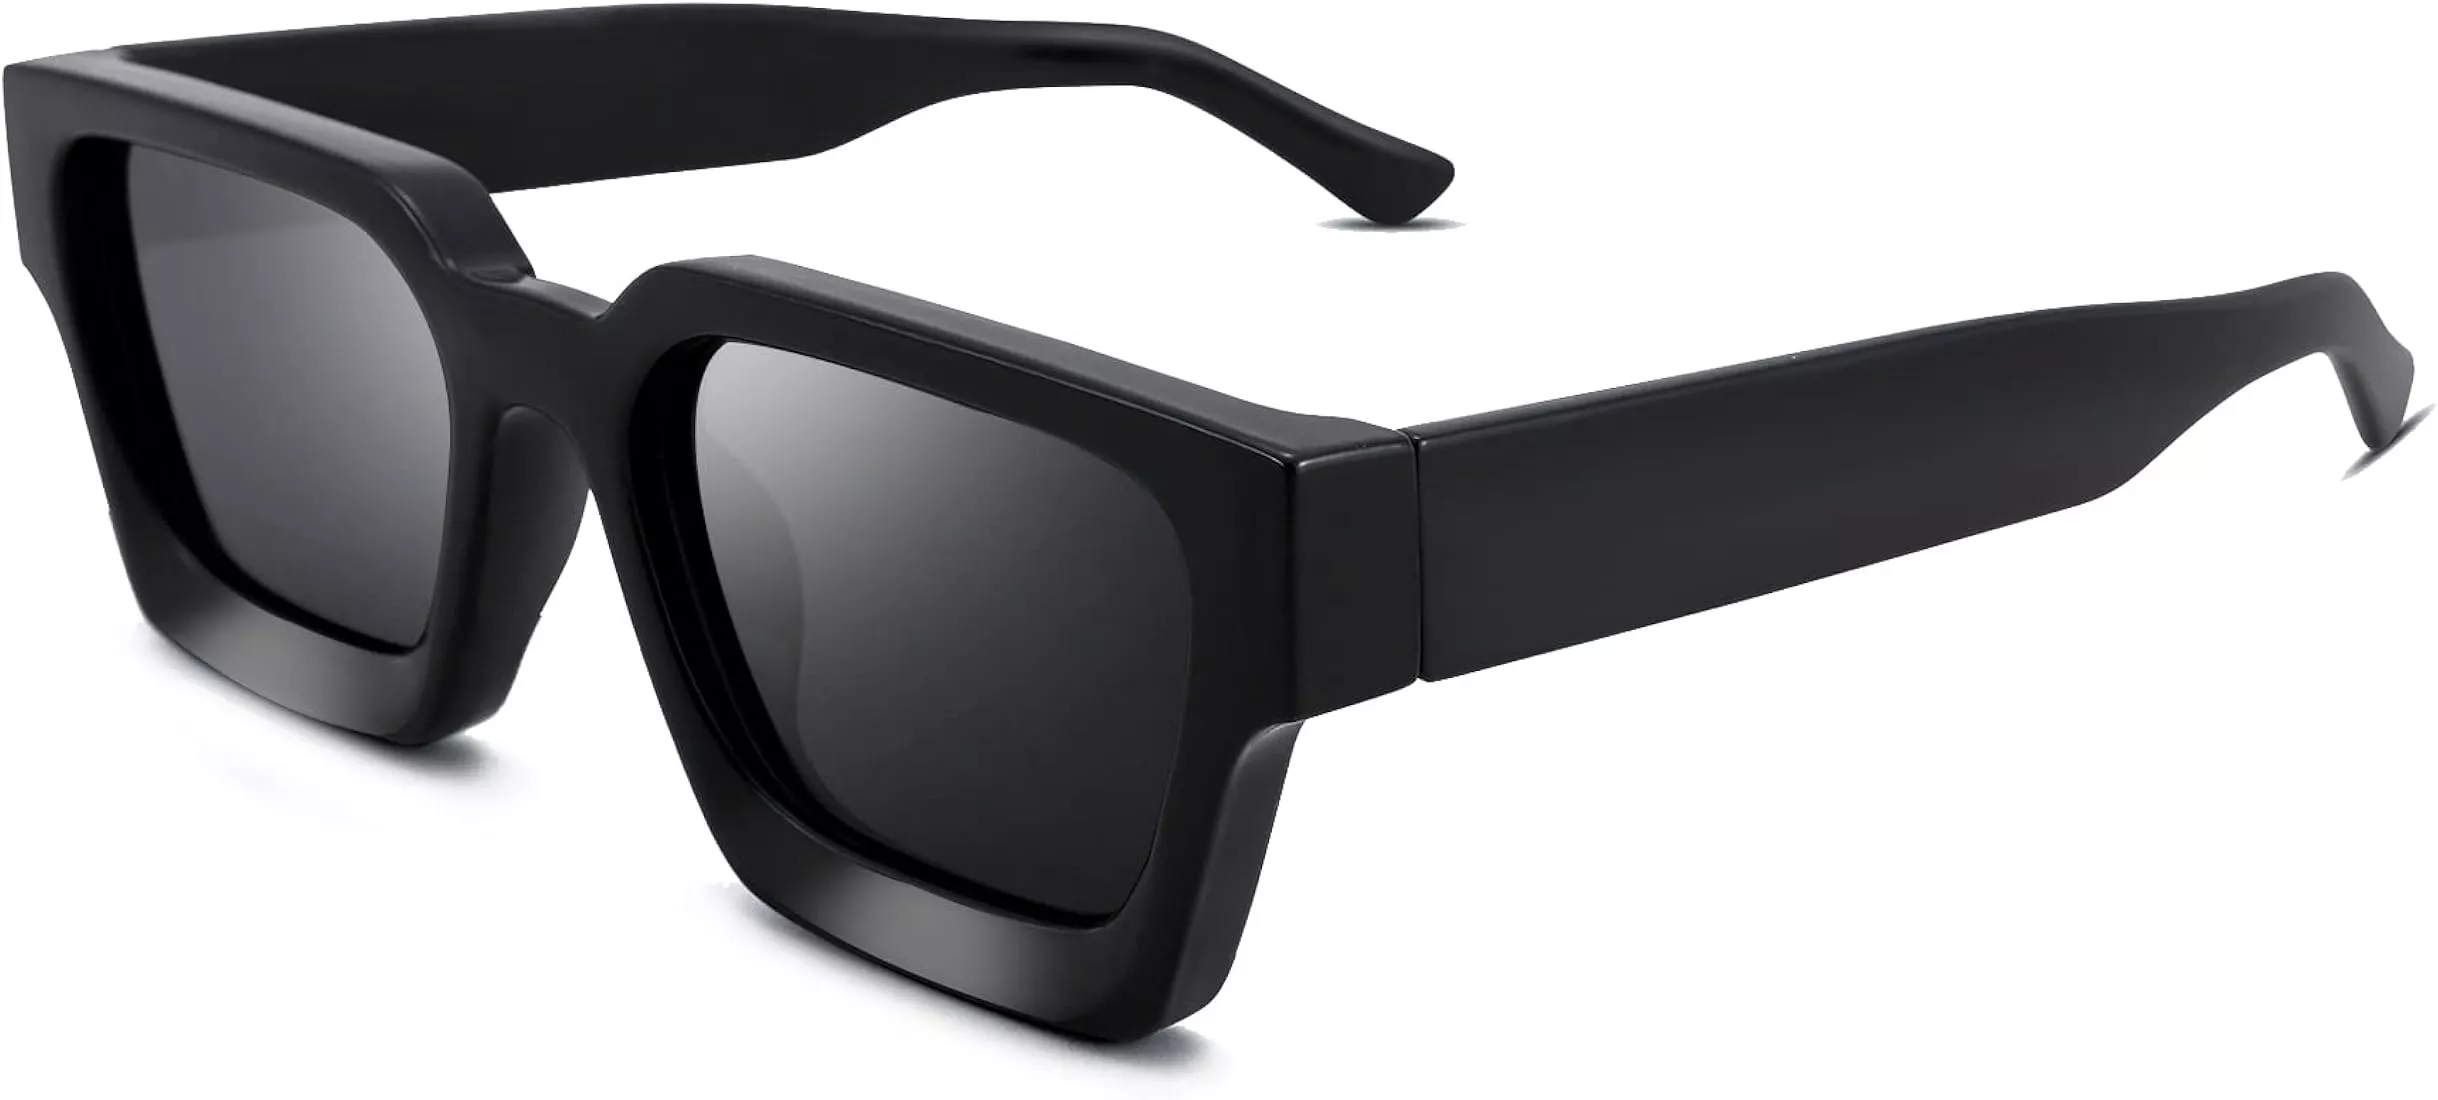 Braylenz Retro Square Sunglasses for Men Women Thick Frame Chunky Rectangle  Shades